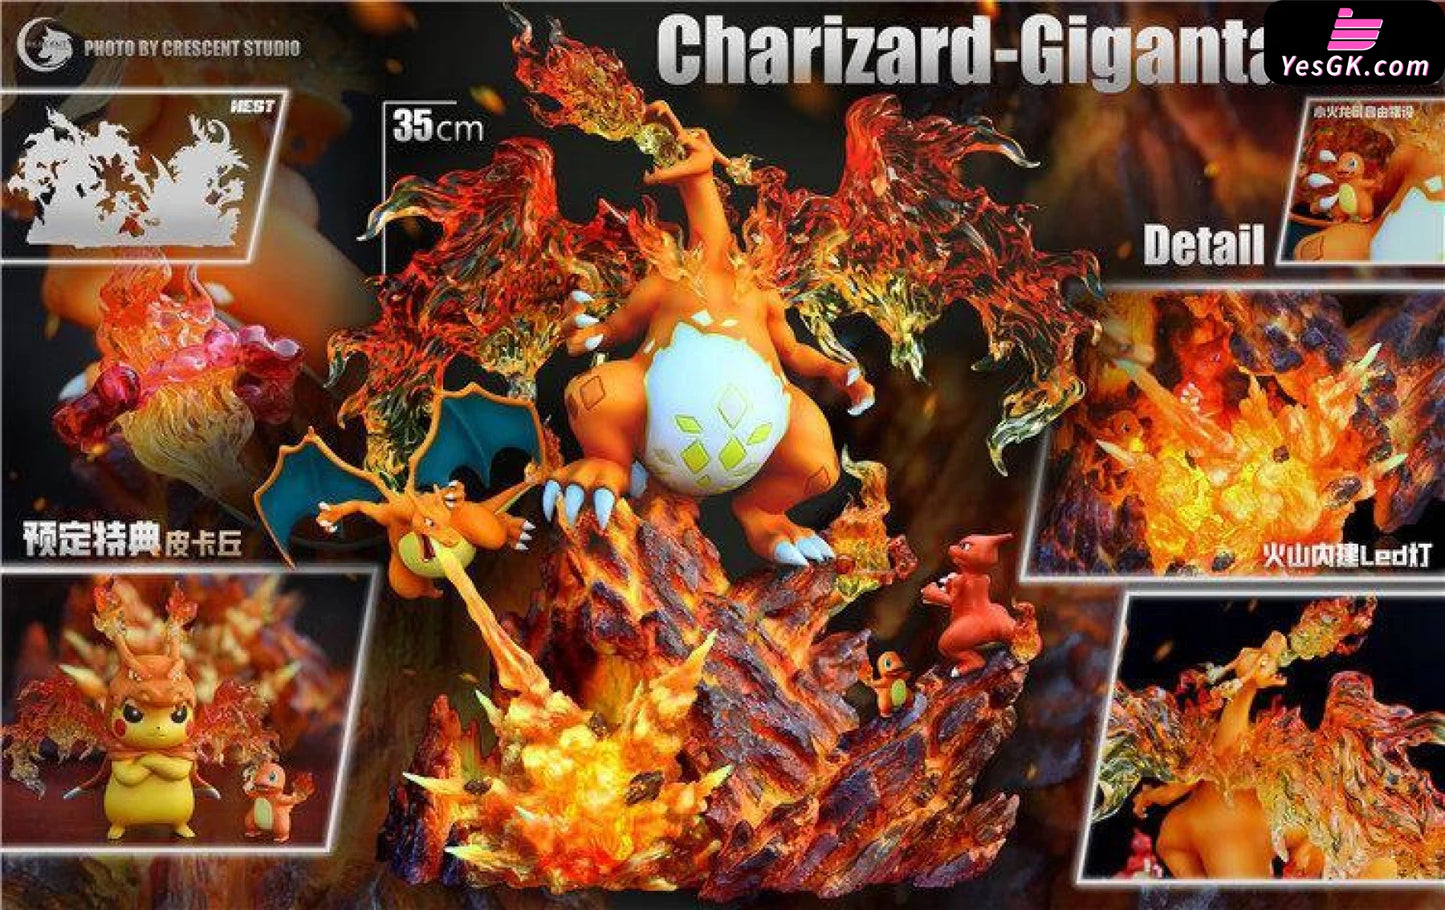 Pokémon Gigantamax Charizard Evolution Series Resin Statue - Crescent Studio [In Stock]